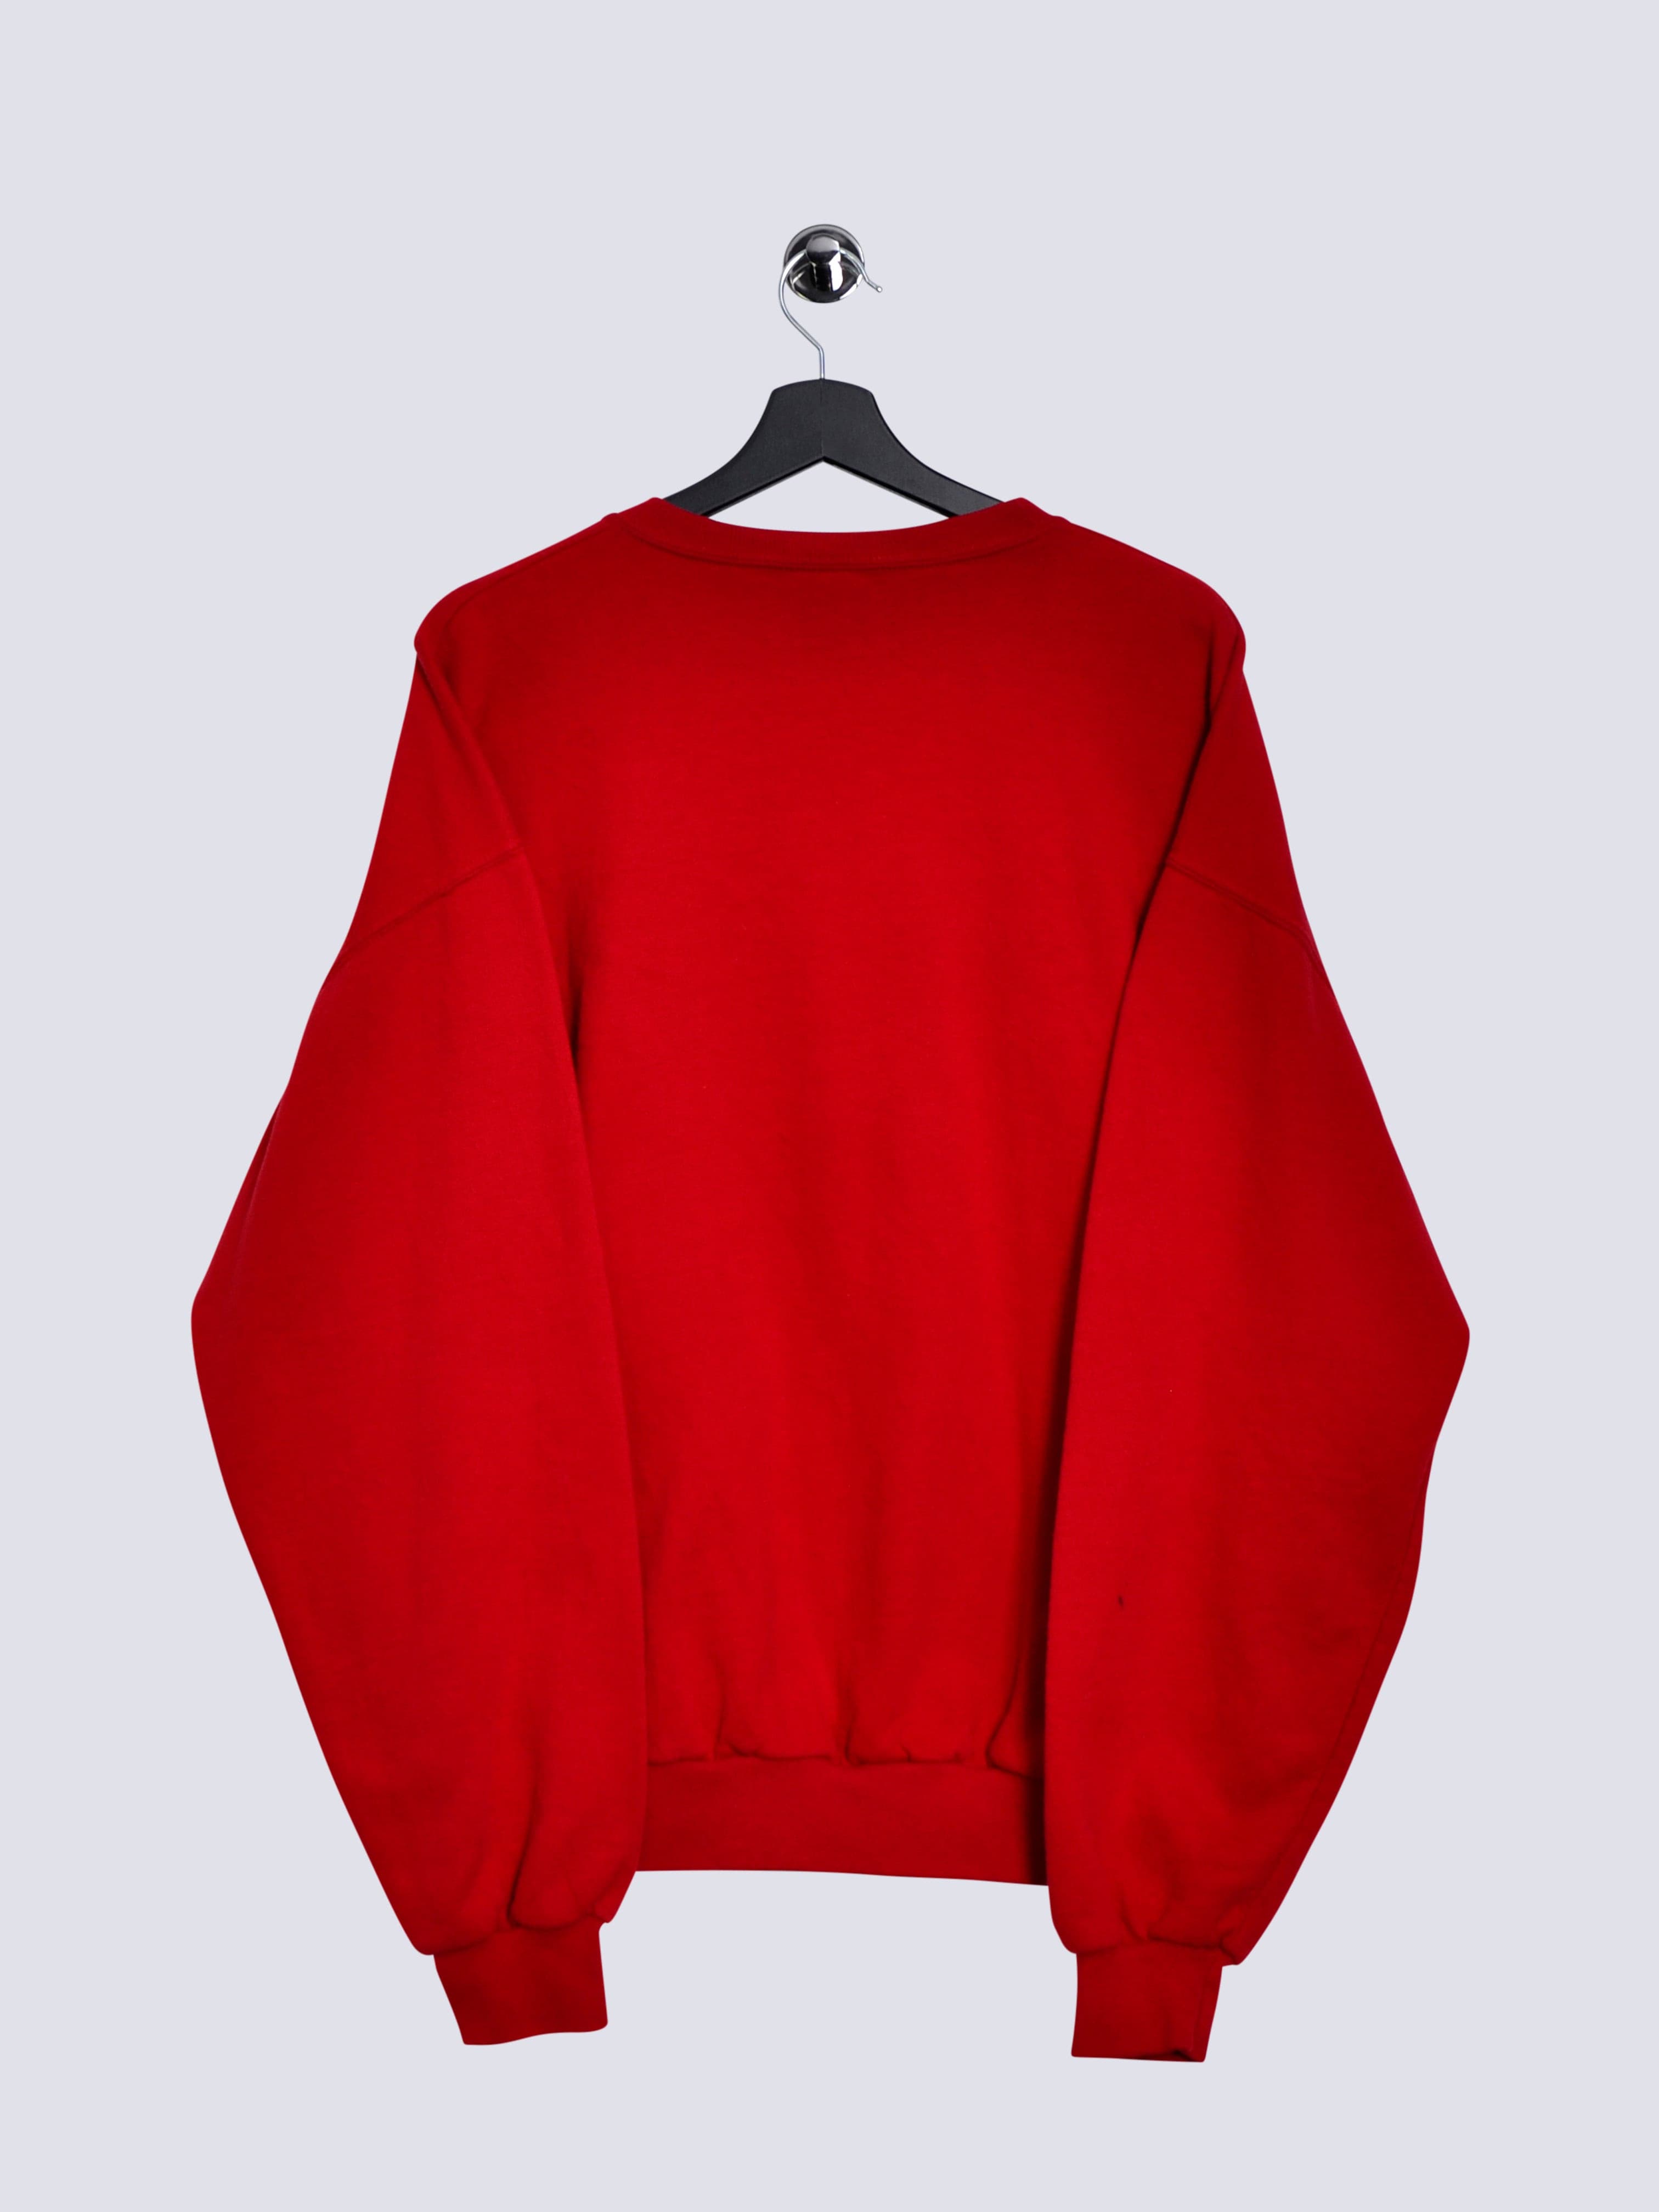 Patuxent Eagles Sweatshirt Red // Large - RHAGHOUSE VINTAGE